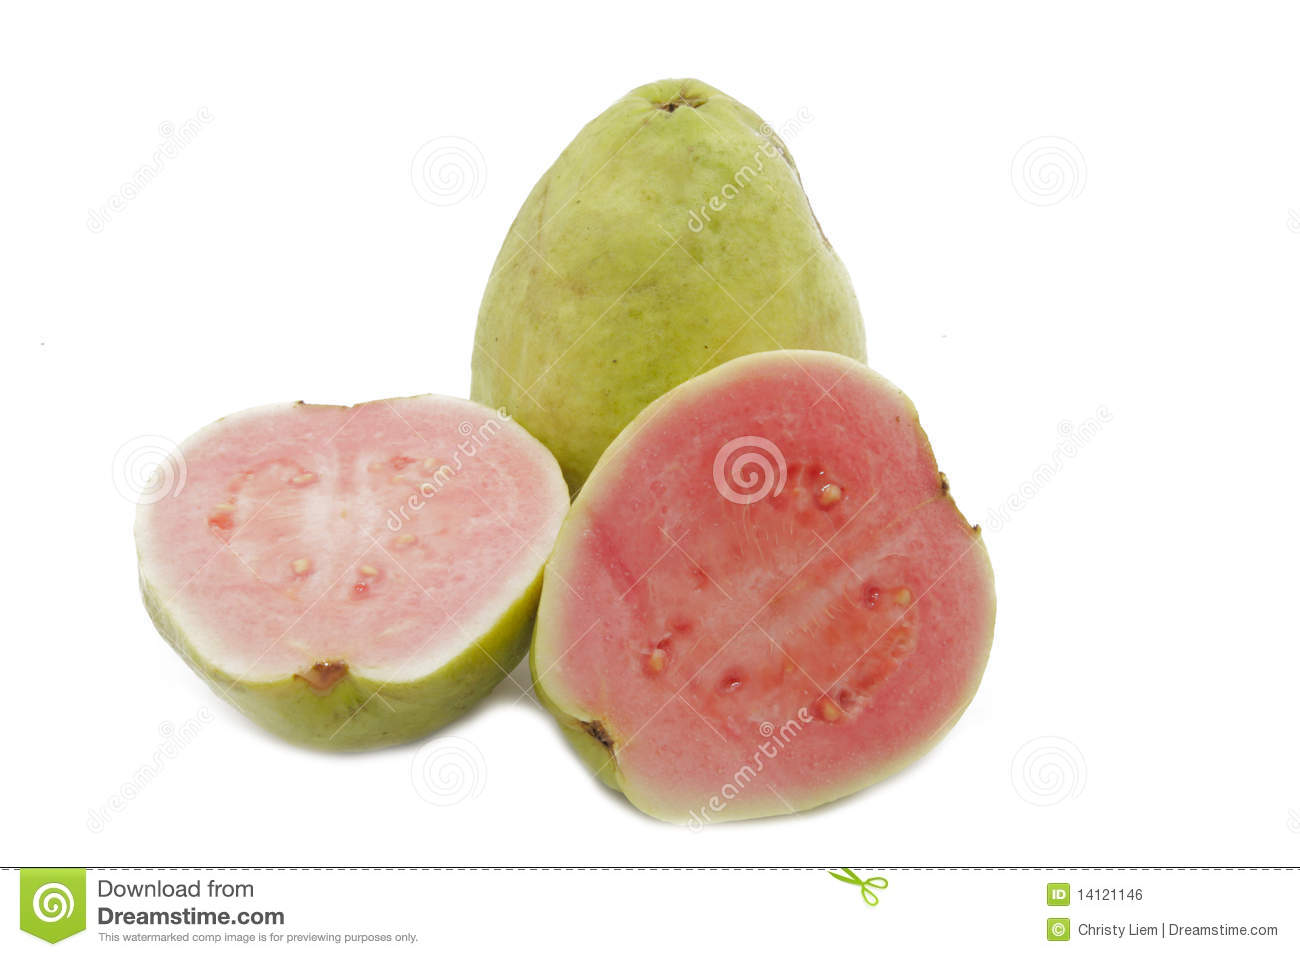 Guava Royalty Free Stock Image   Image  14121146